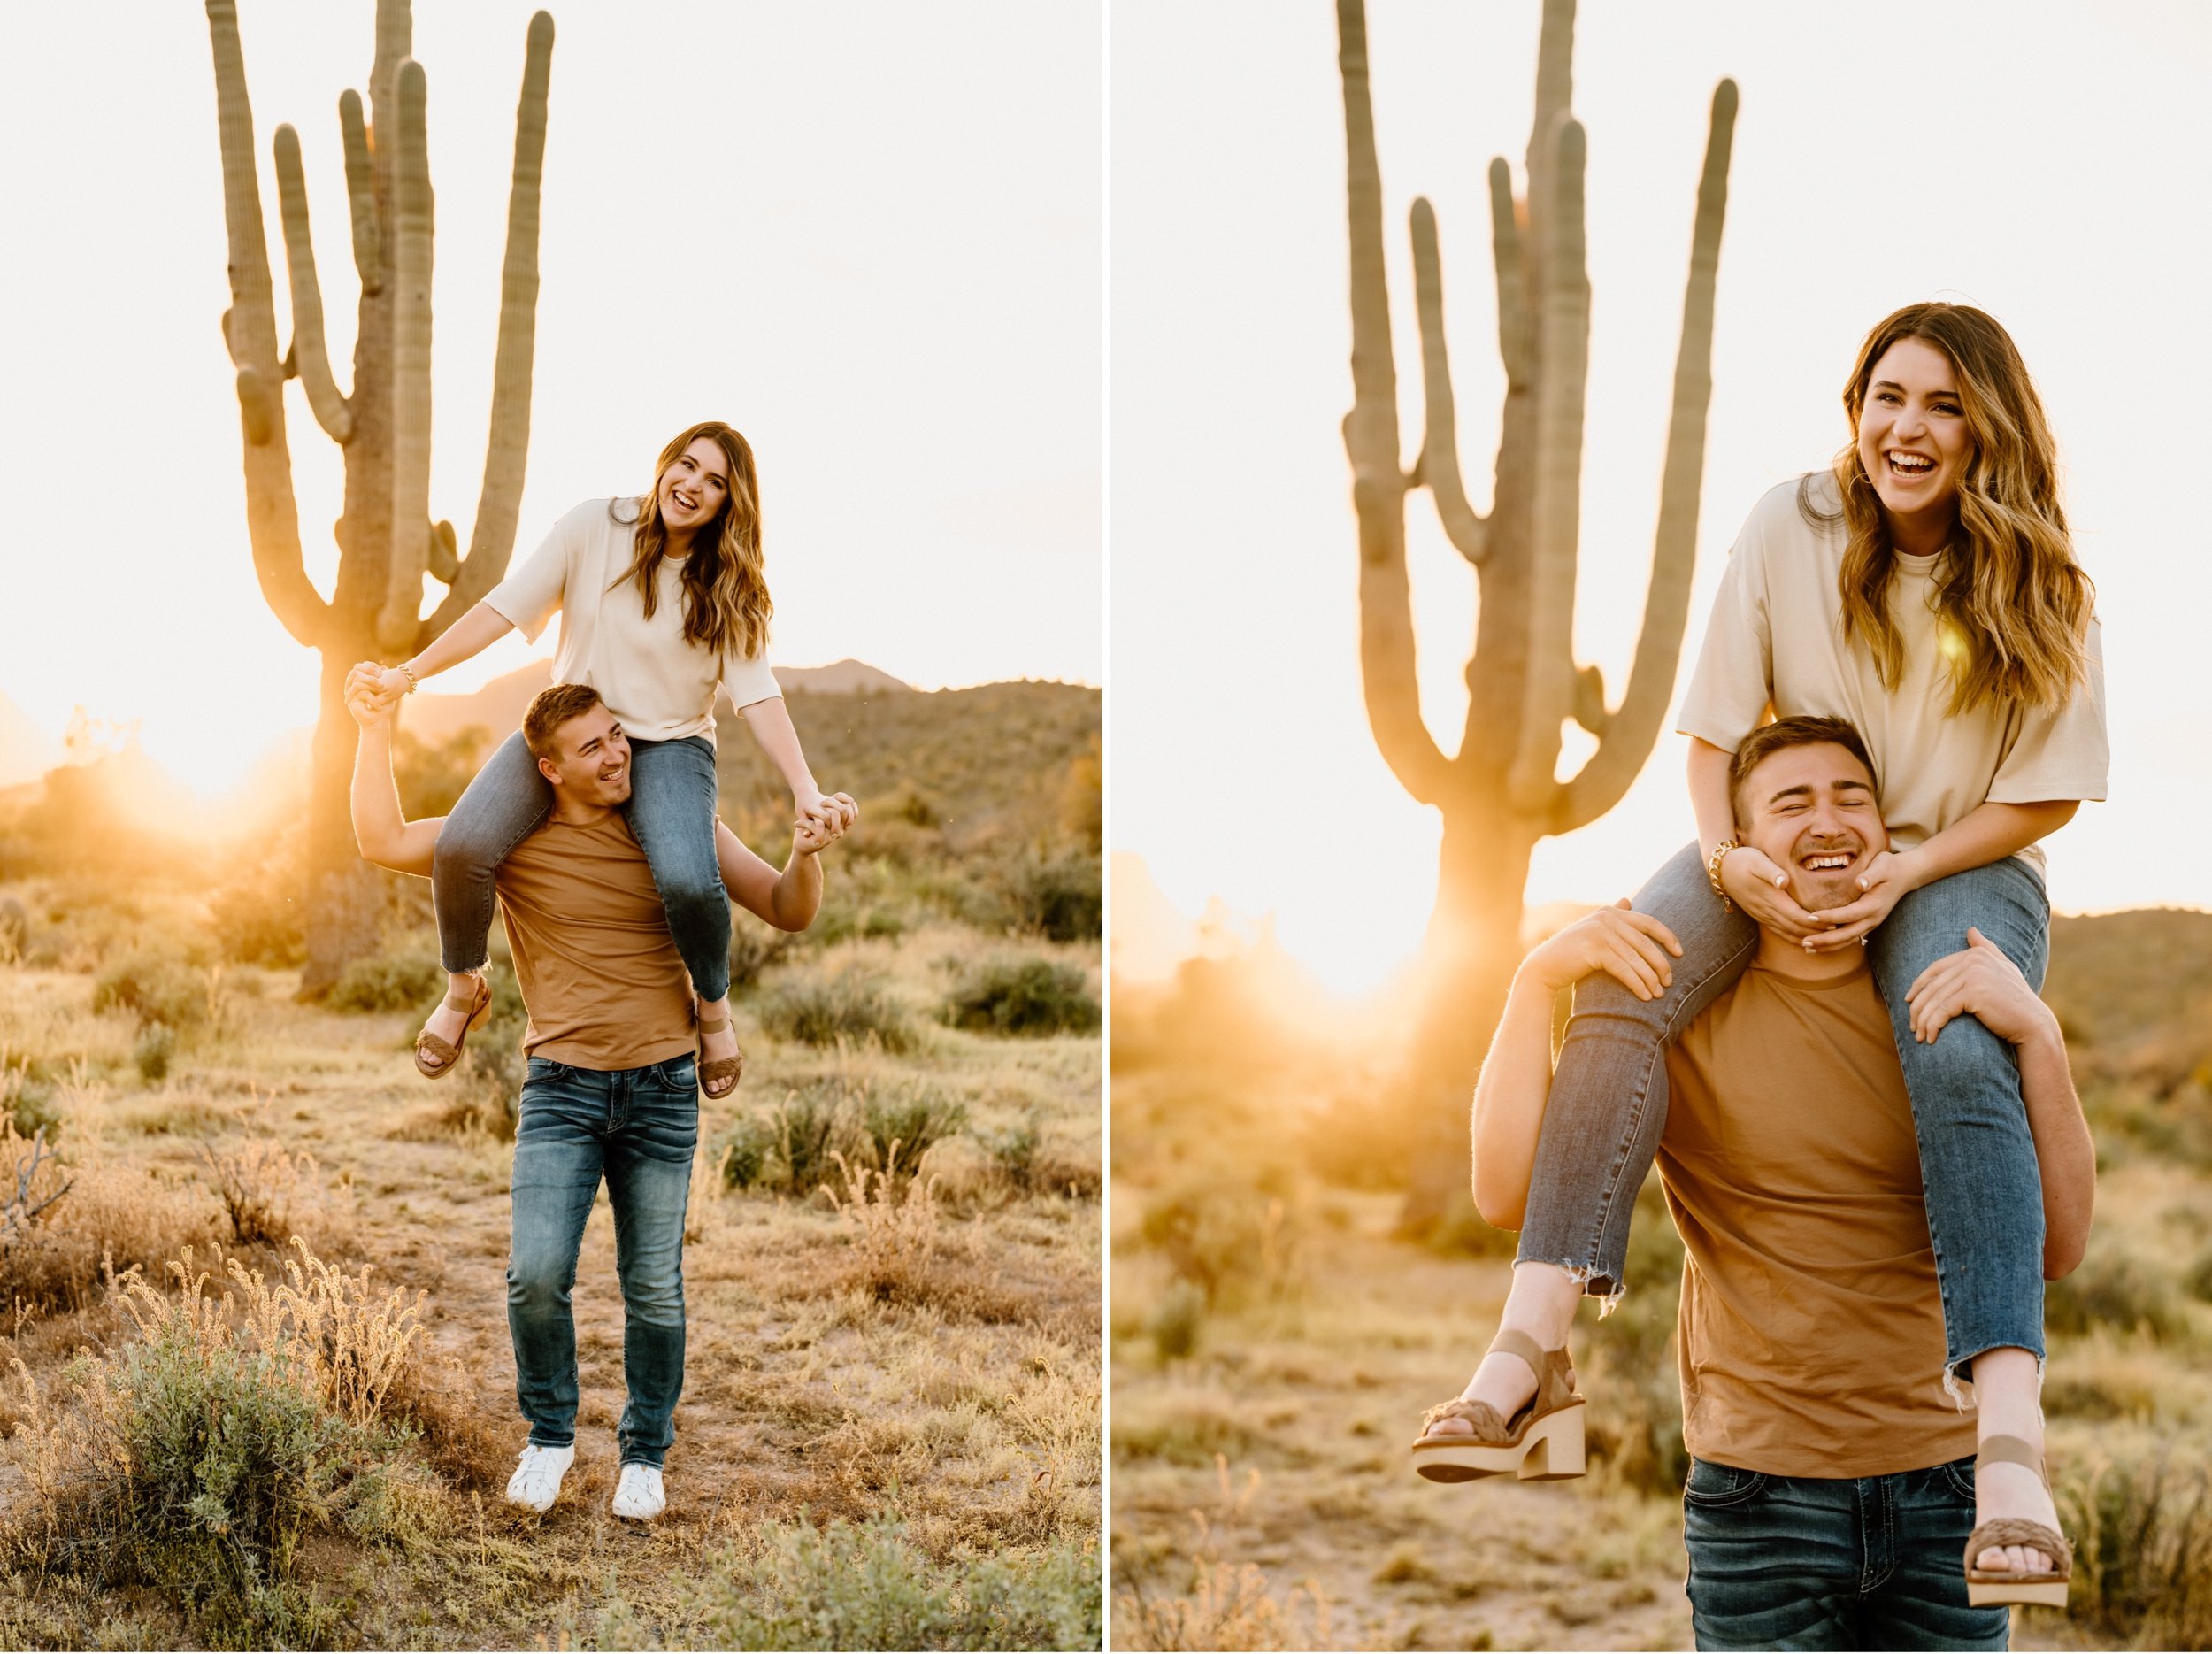 18_Engagement photos at Phon D Sutton in Mesa, Arizona..jpg